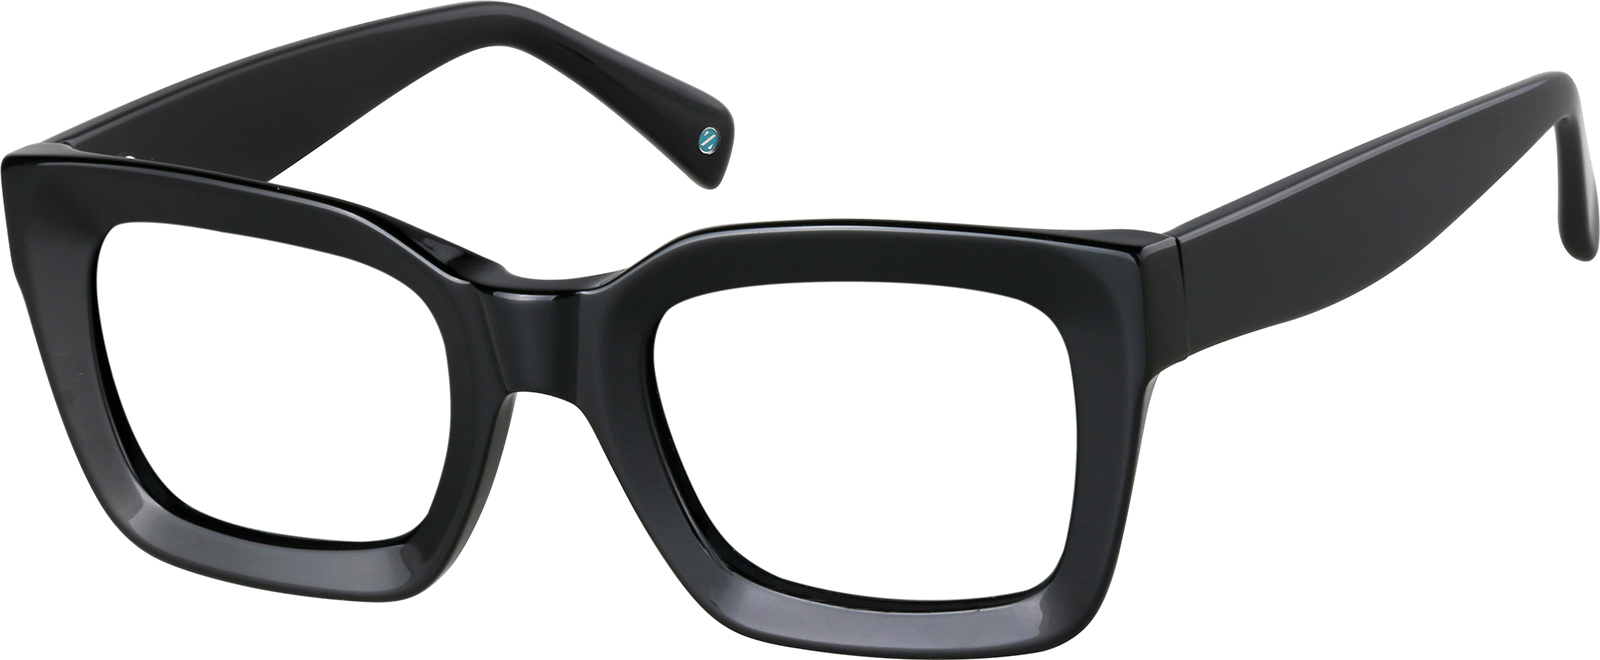 Premium Square Sunglassesangle frame image